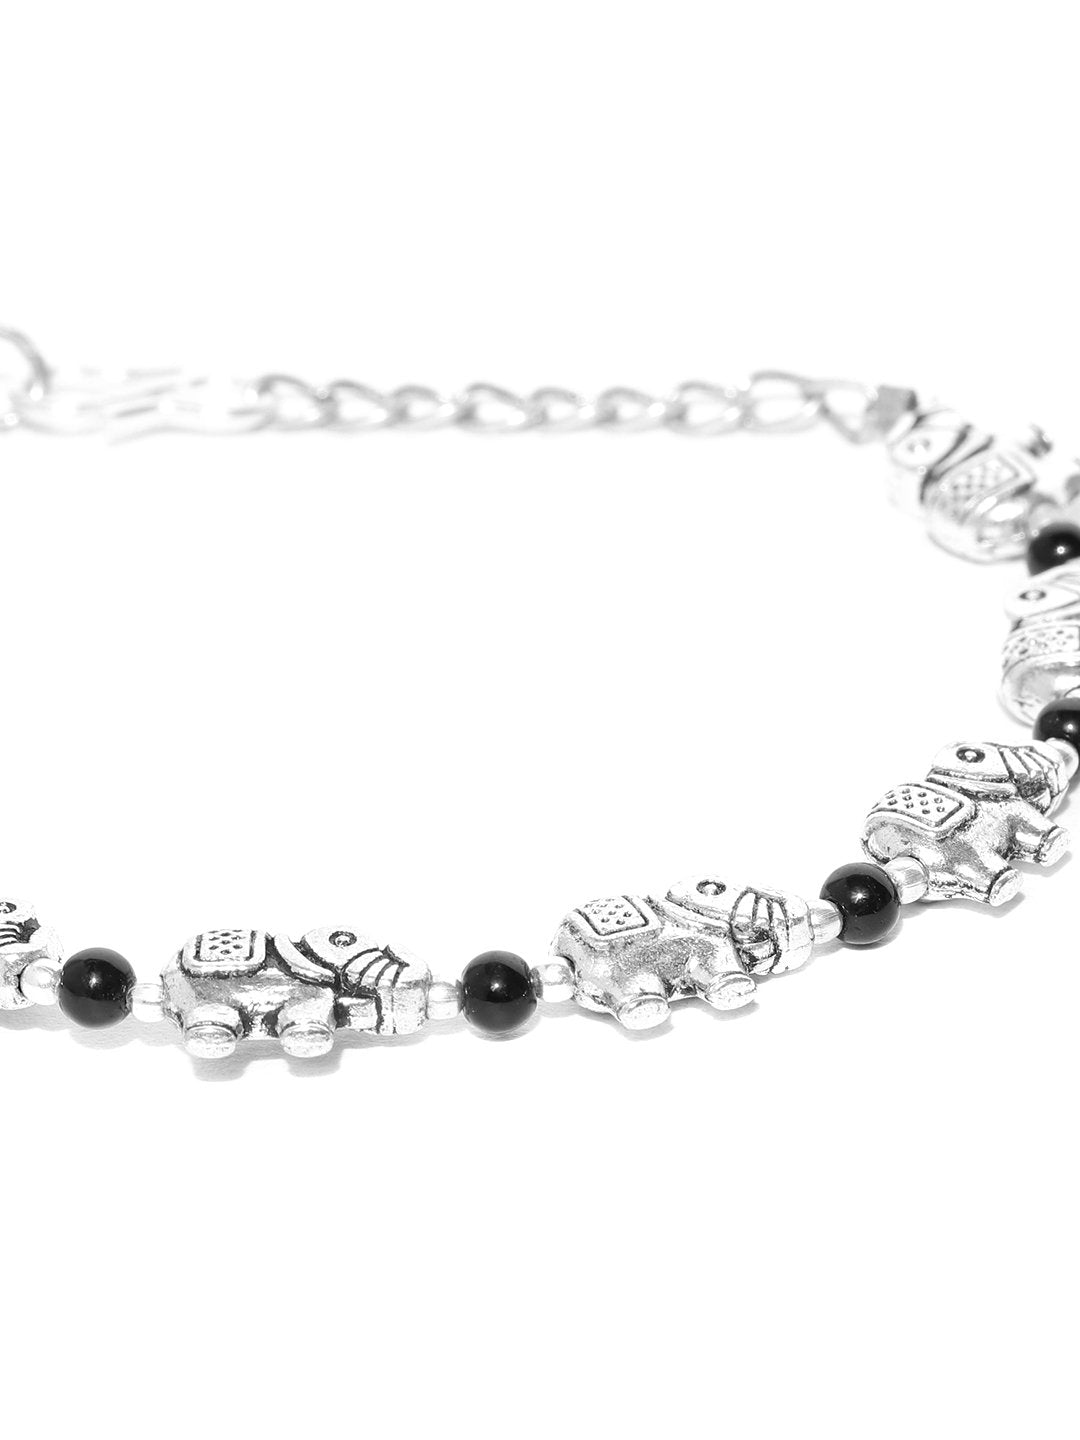 Antique Oxidised Silver-Toned Elephant Inspired Adjustable Chain Bracelet